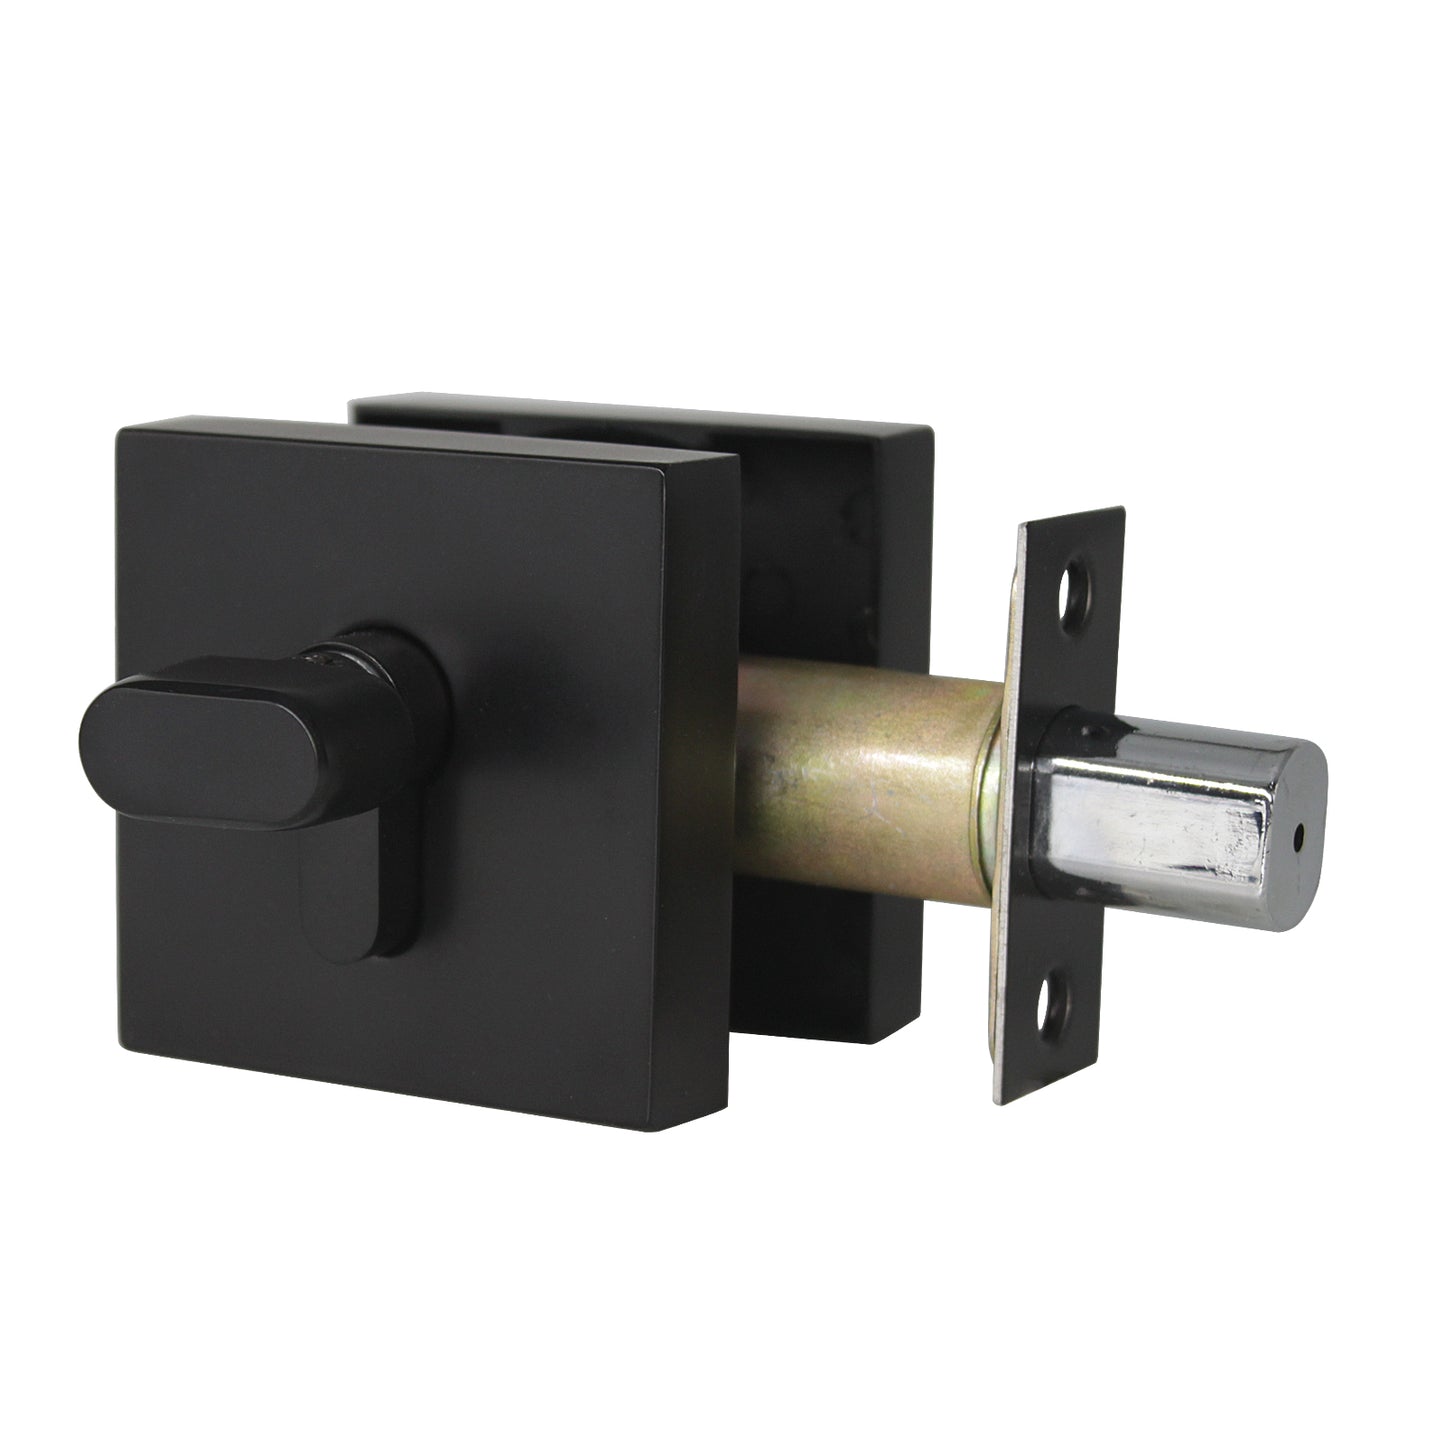 Square Design Door Deadbolt with Single Cylinder Lock Black Finish DLD105BK